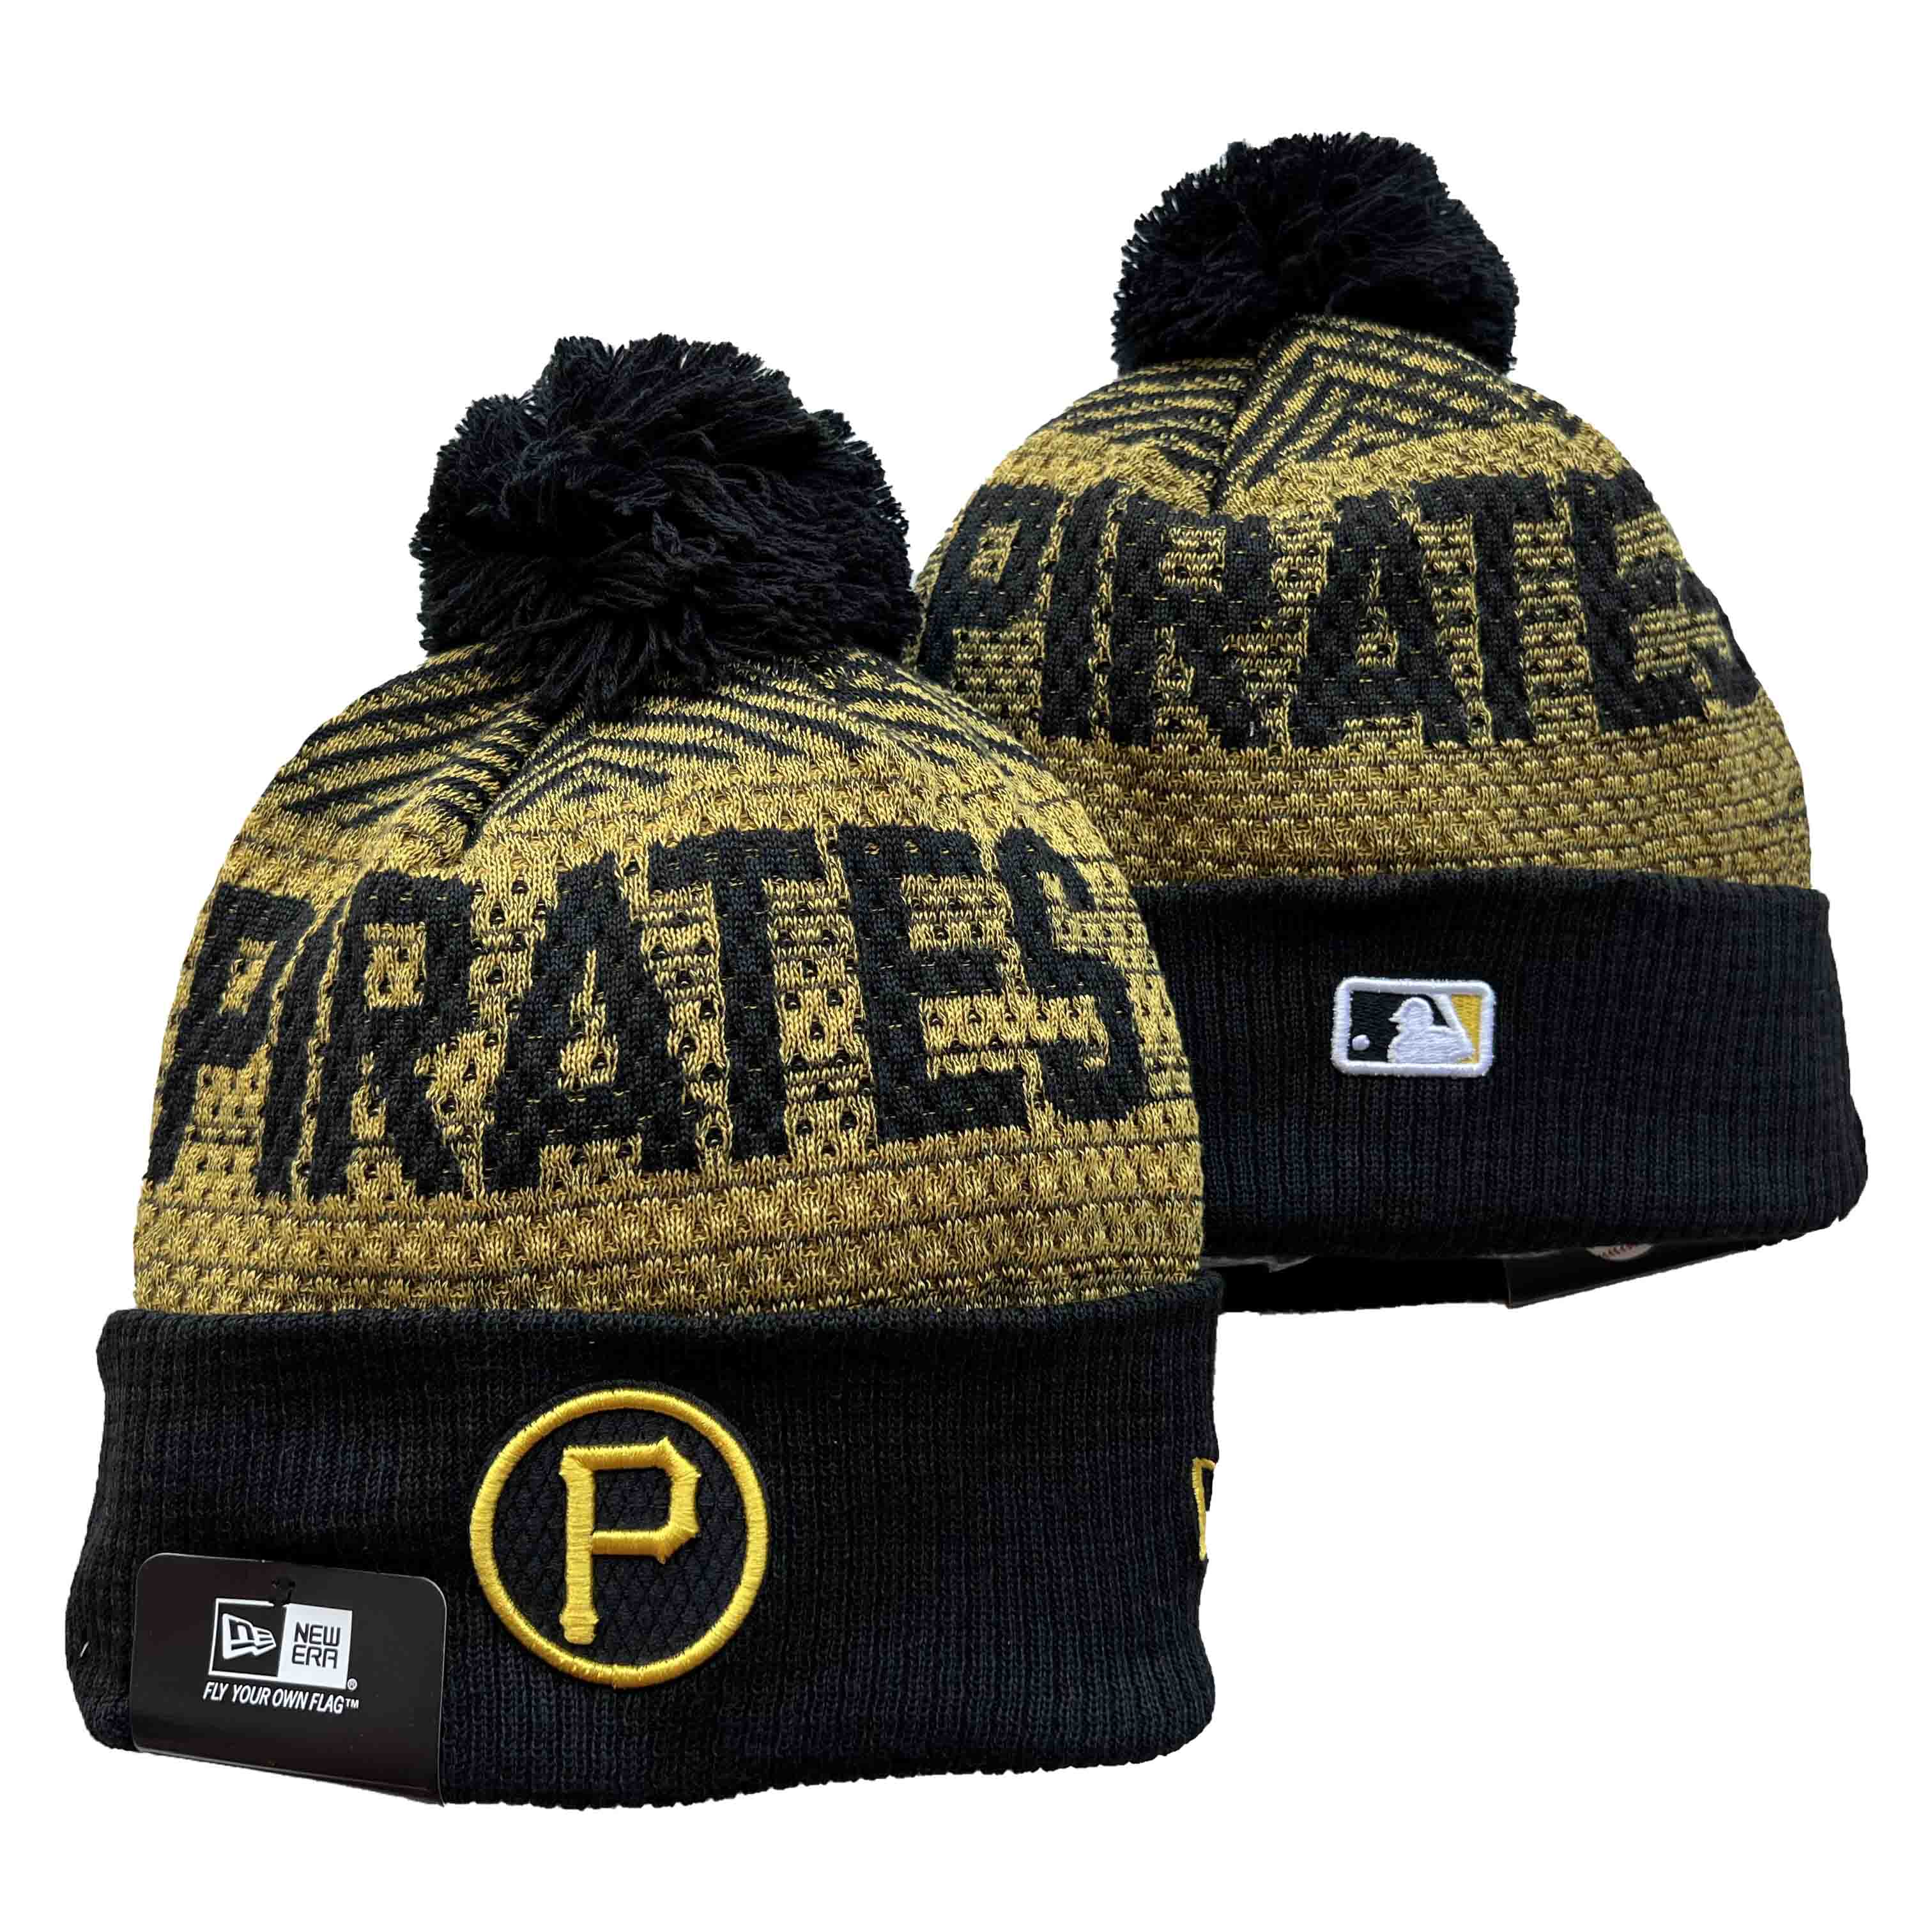 Pittsburgh Pirates Knit Hats -2